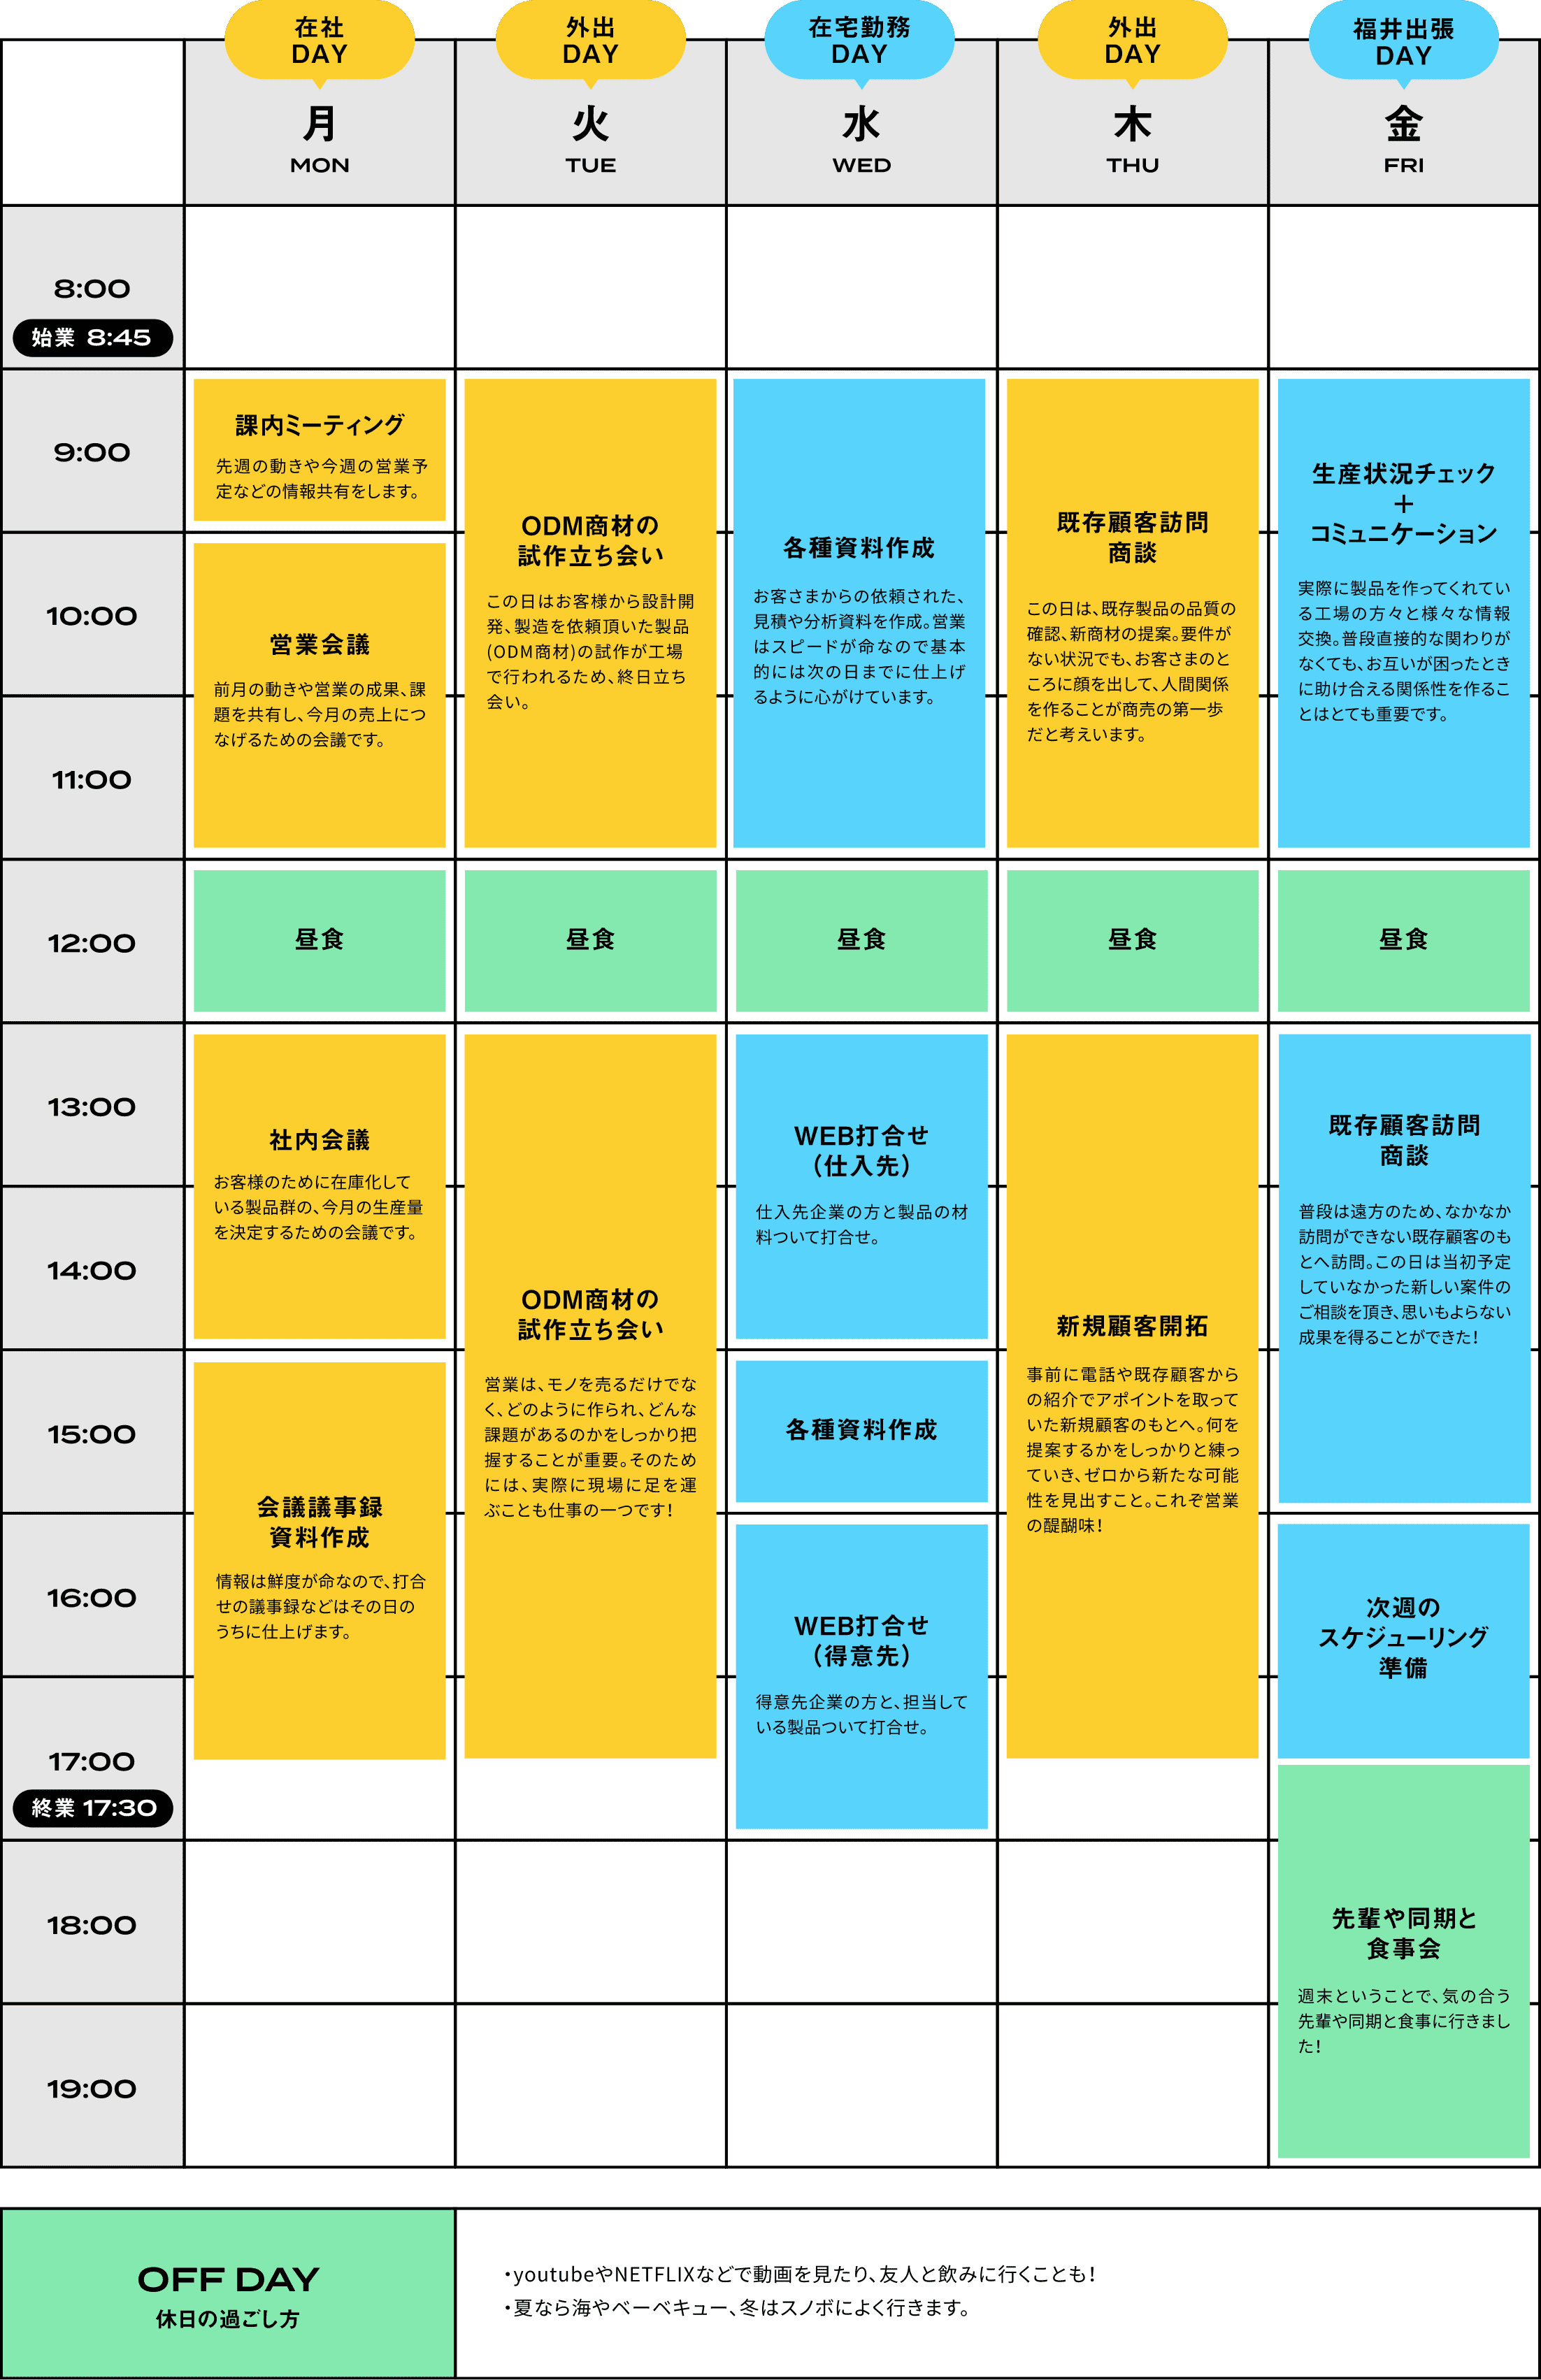 S.K.1 week schedule